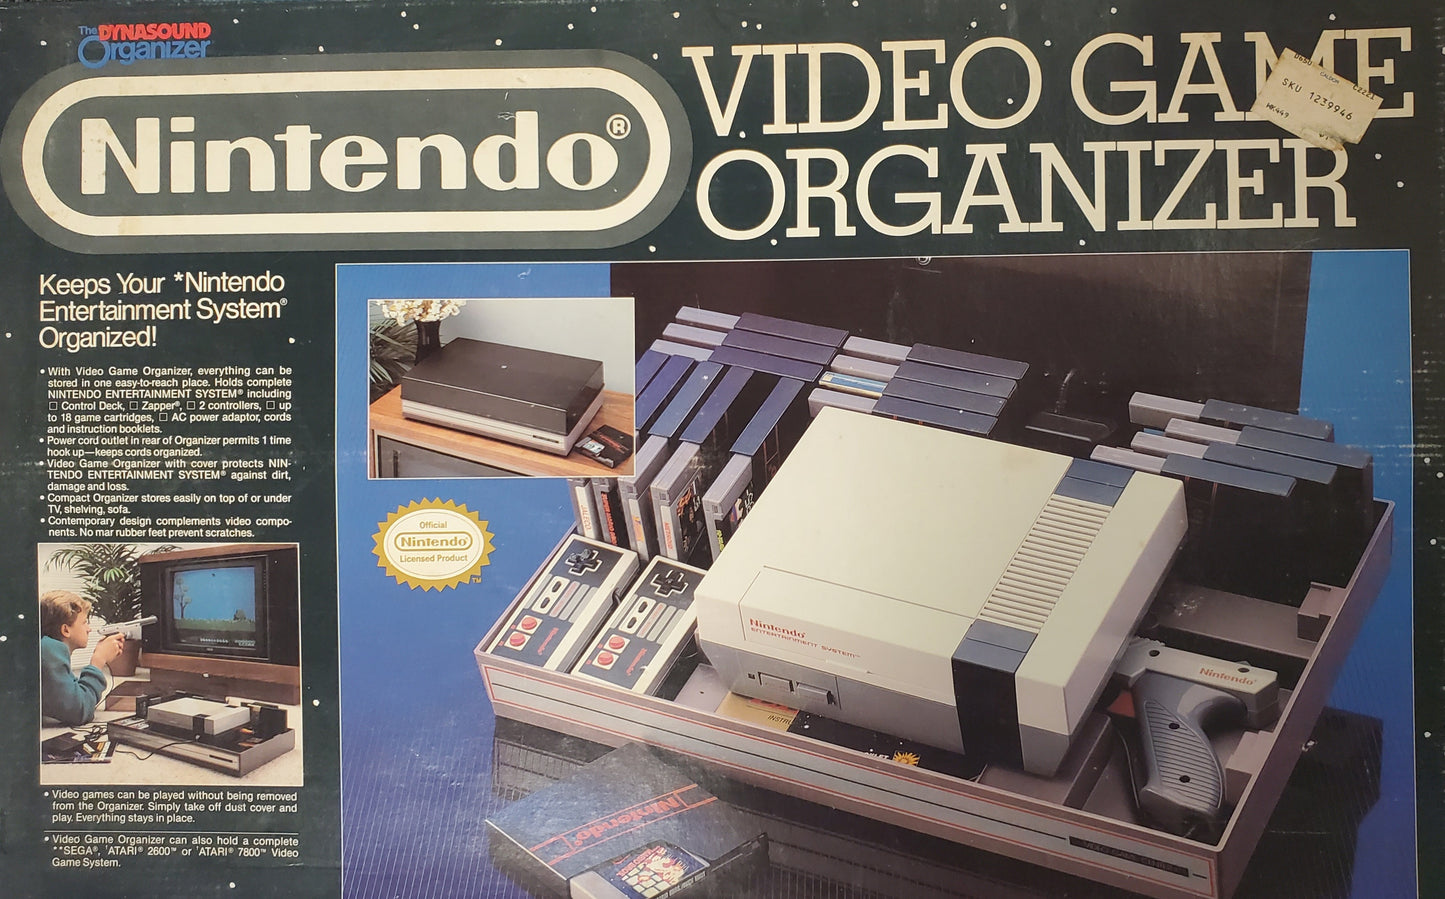 Nintendo Video Game Organizer (Nintendo NES)